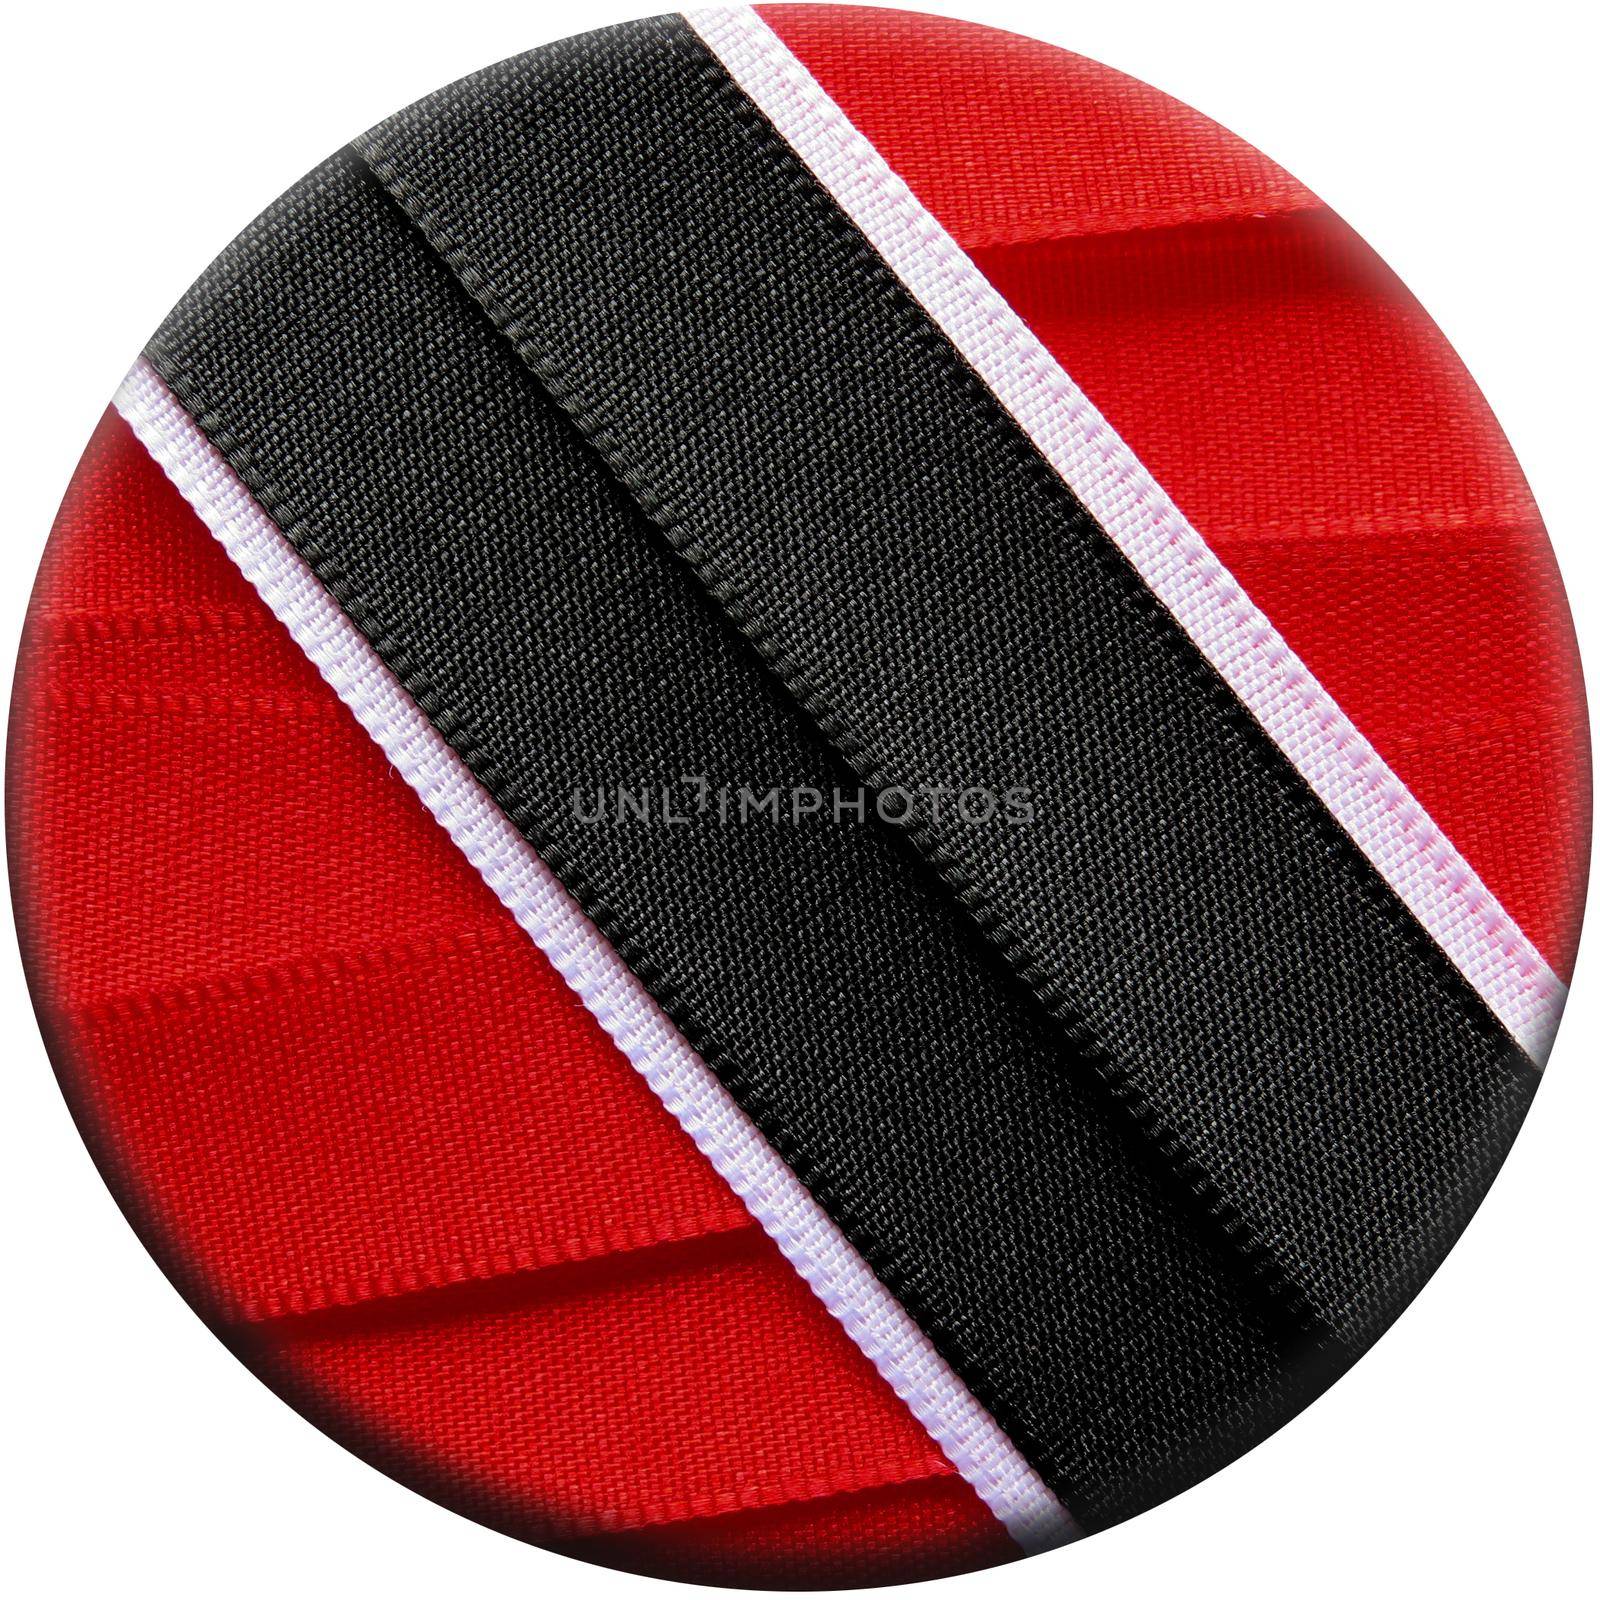 Trinidad and Tobago flag or banner by aroas